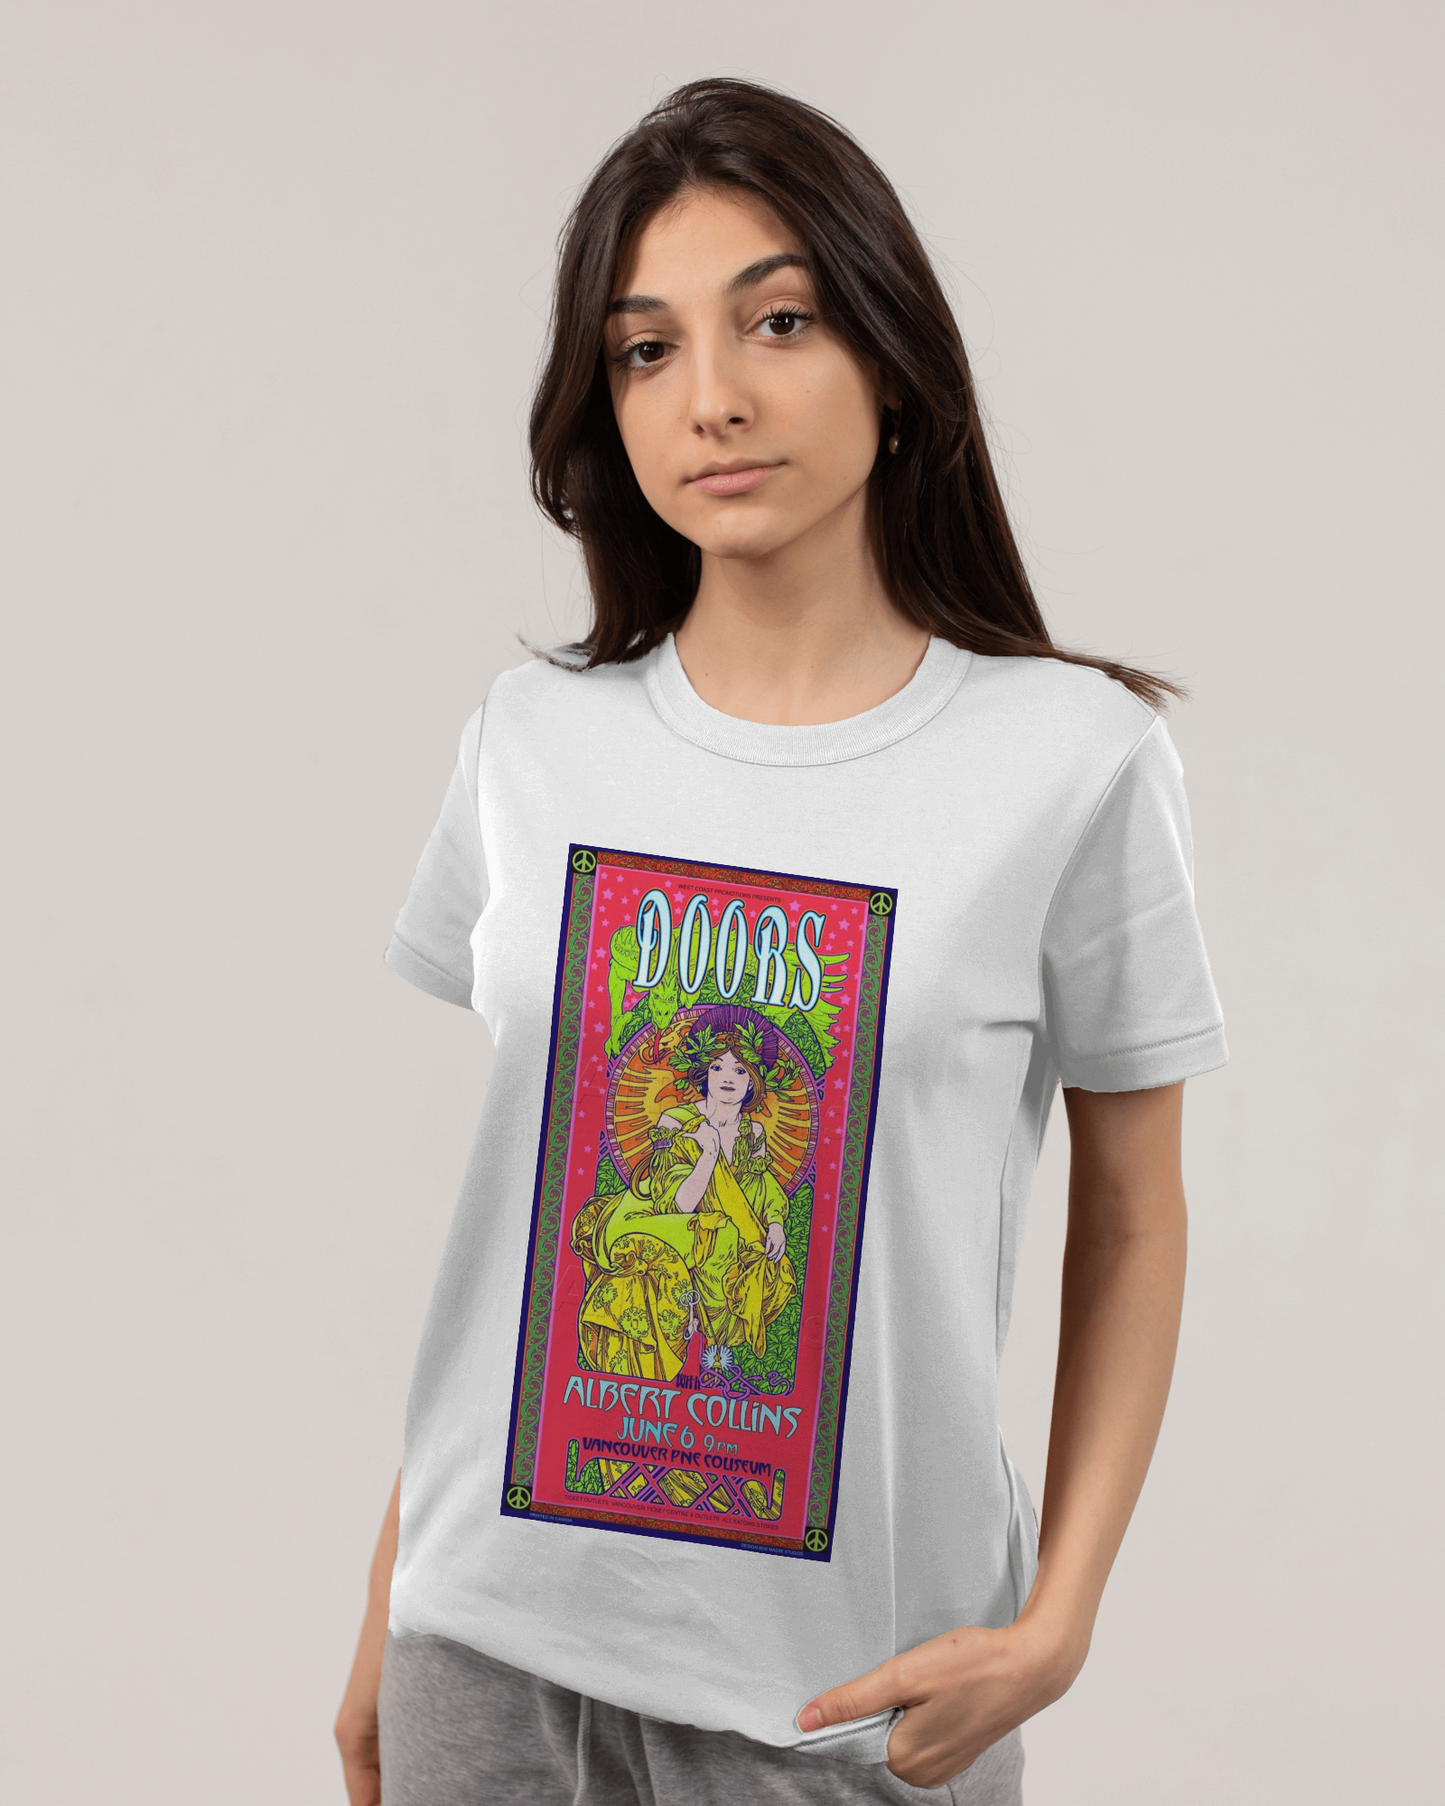 The Doors 2 | T-shirt | Music | Unisex